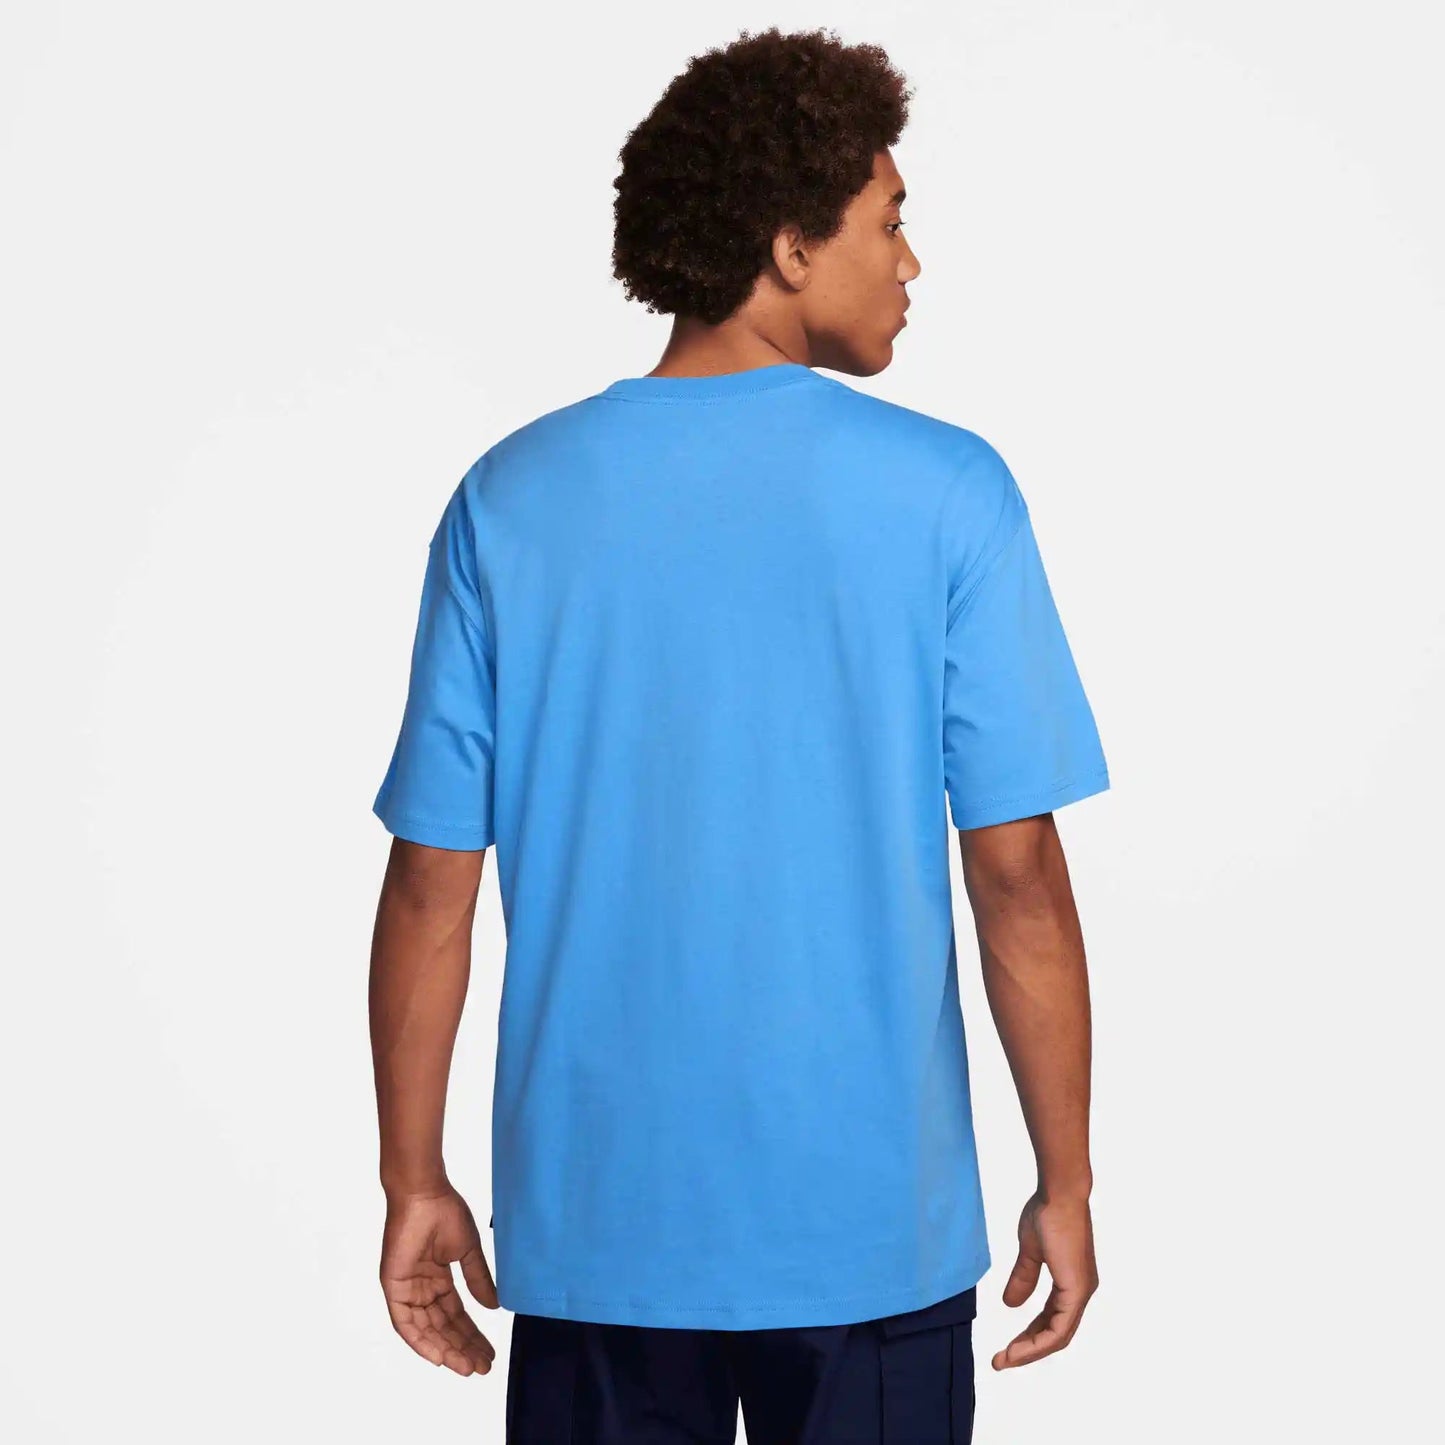 Nike SB Logo Skate T-Shirt, university blue/black - Tiki Room Skateboards - 5